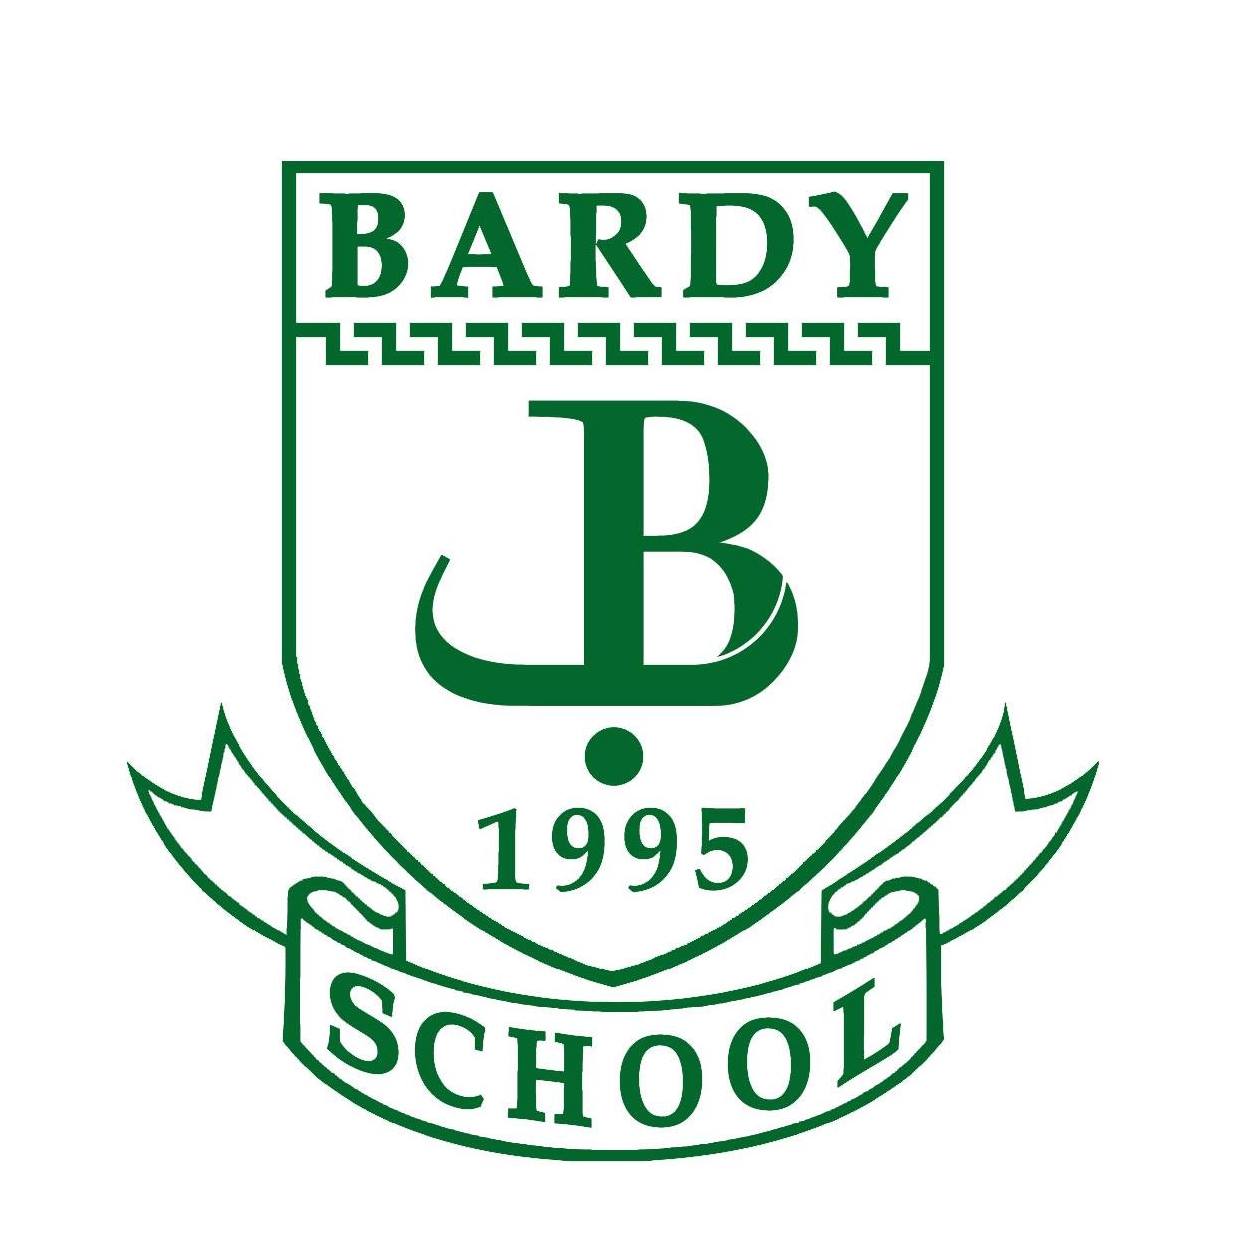 Bardy language school